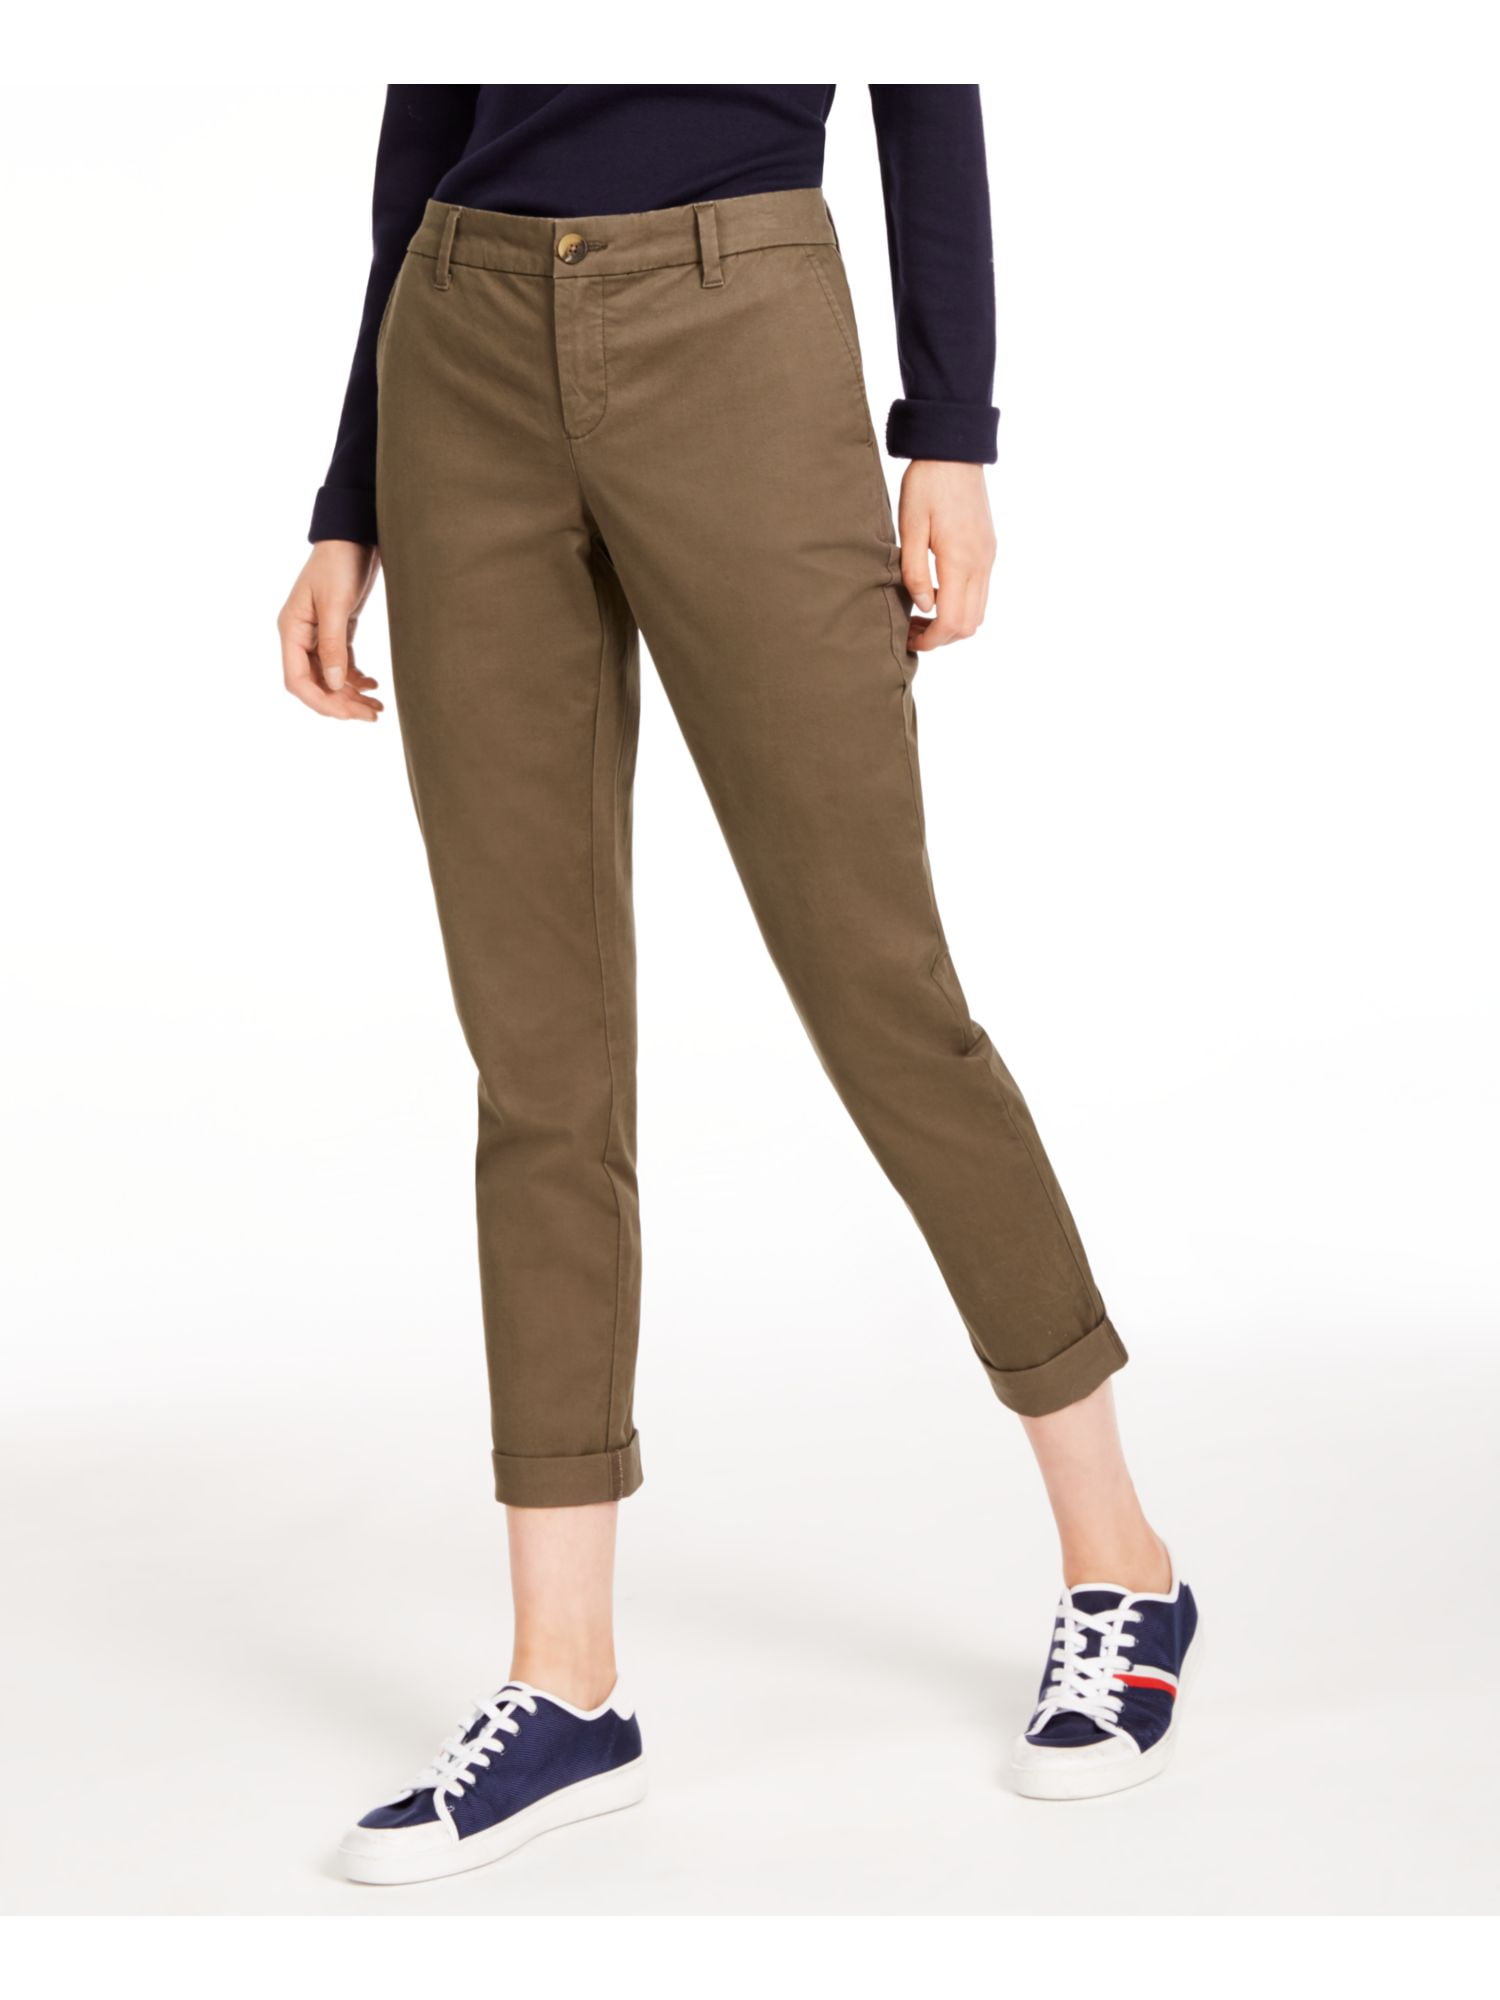 Tommy Hilfiger Women's Capri Pants Size 6, Beige, Co… - Gem